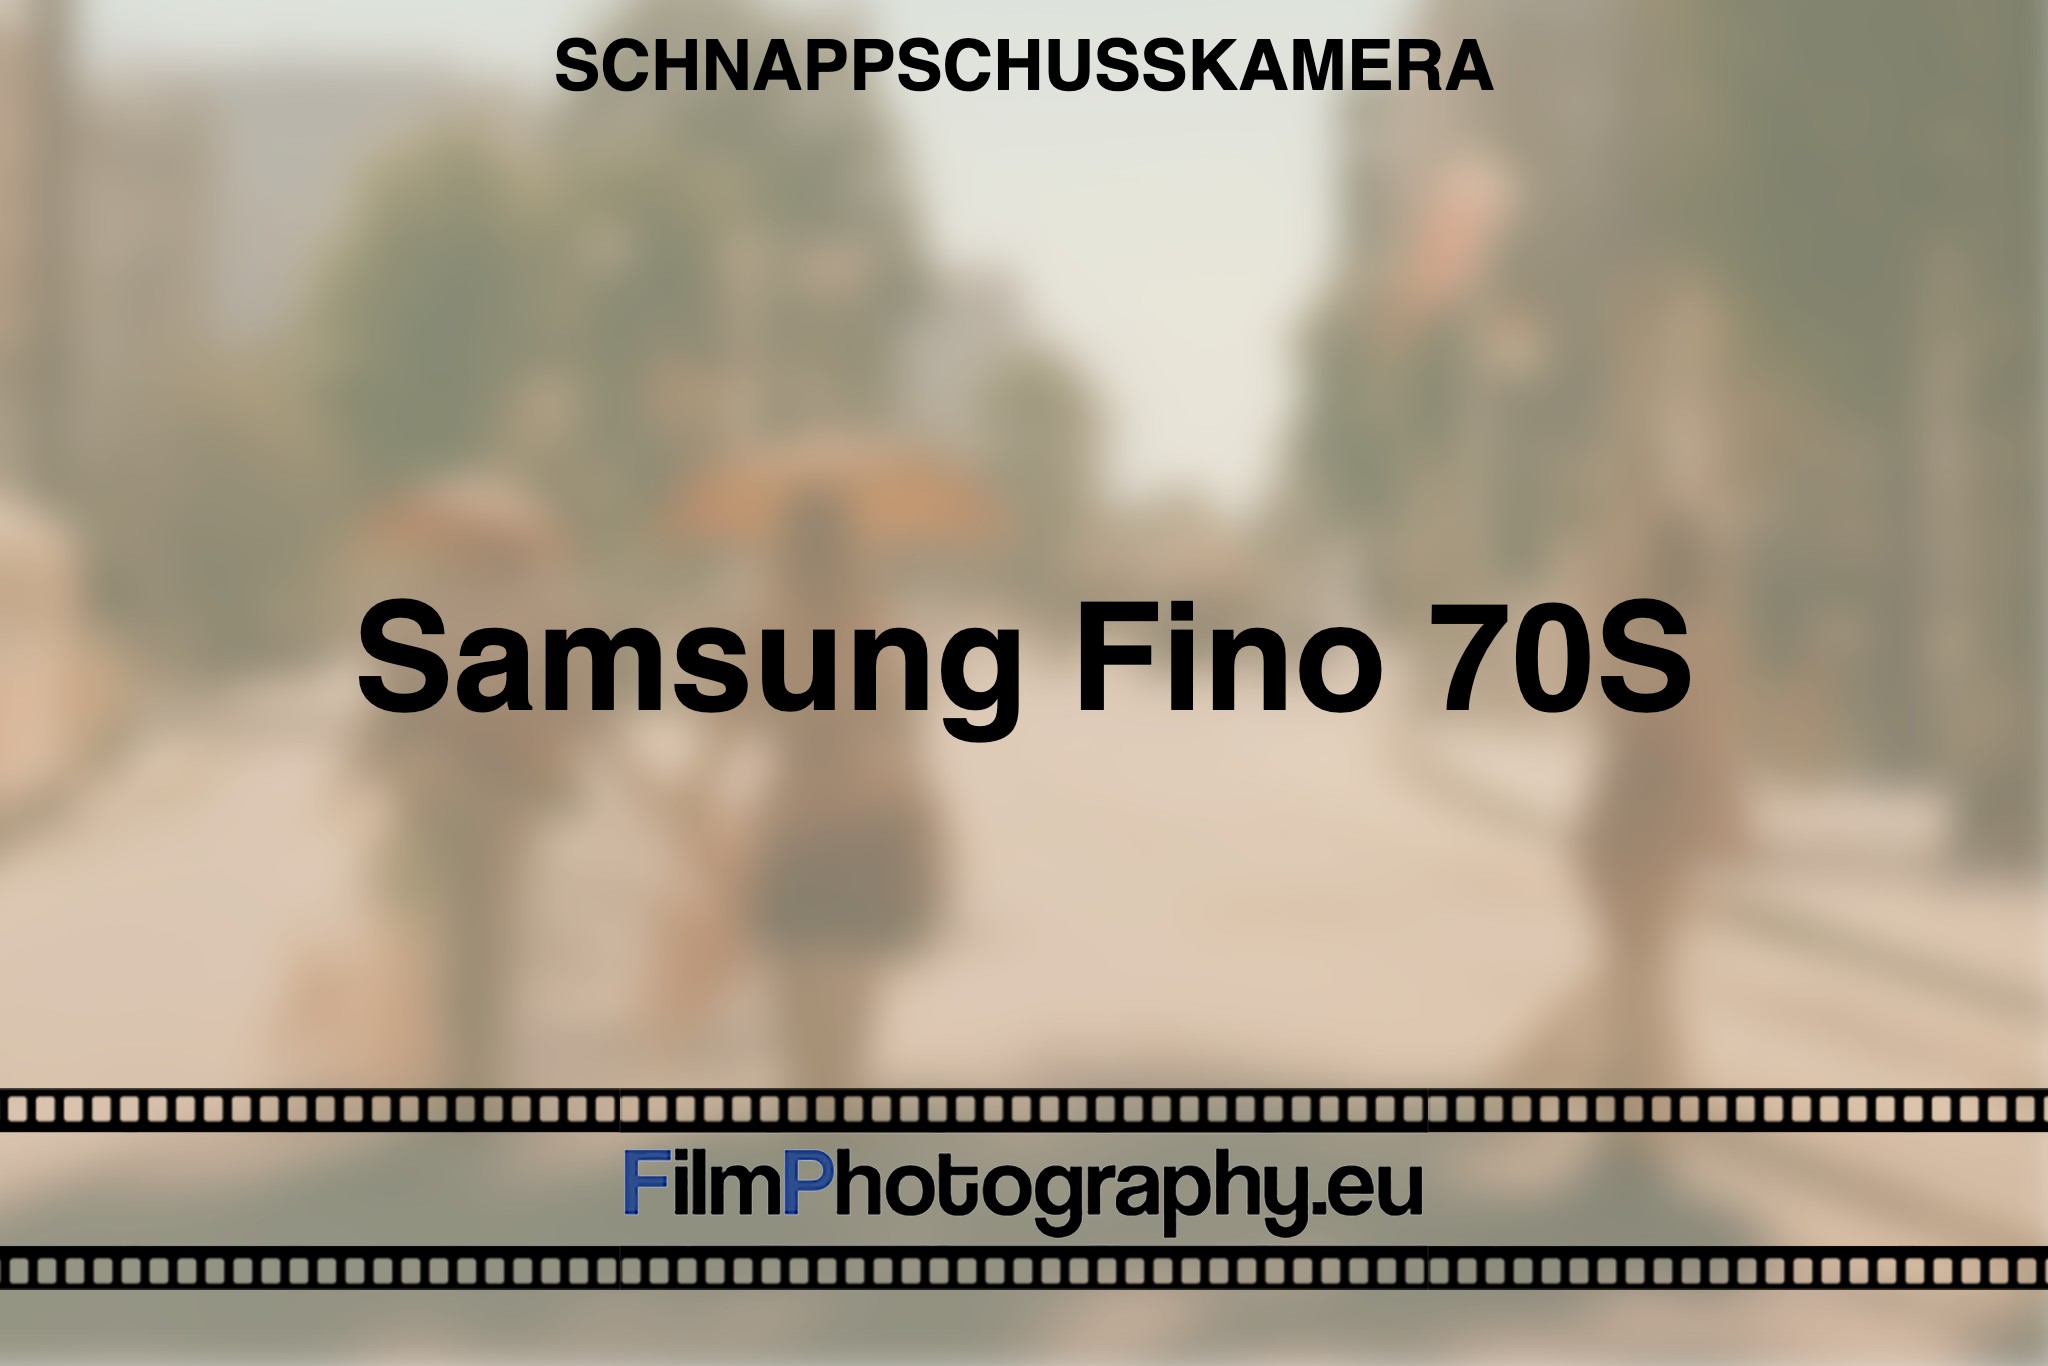 samsung-fino-70s-schnappschusskamera-bnv